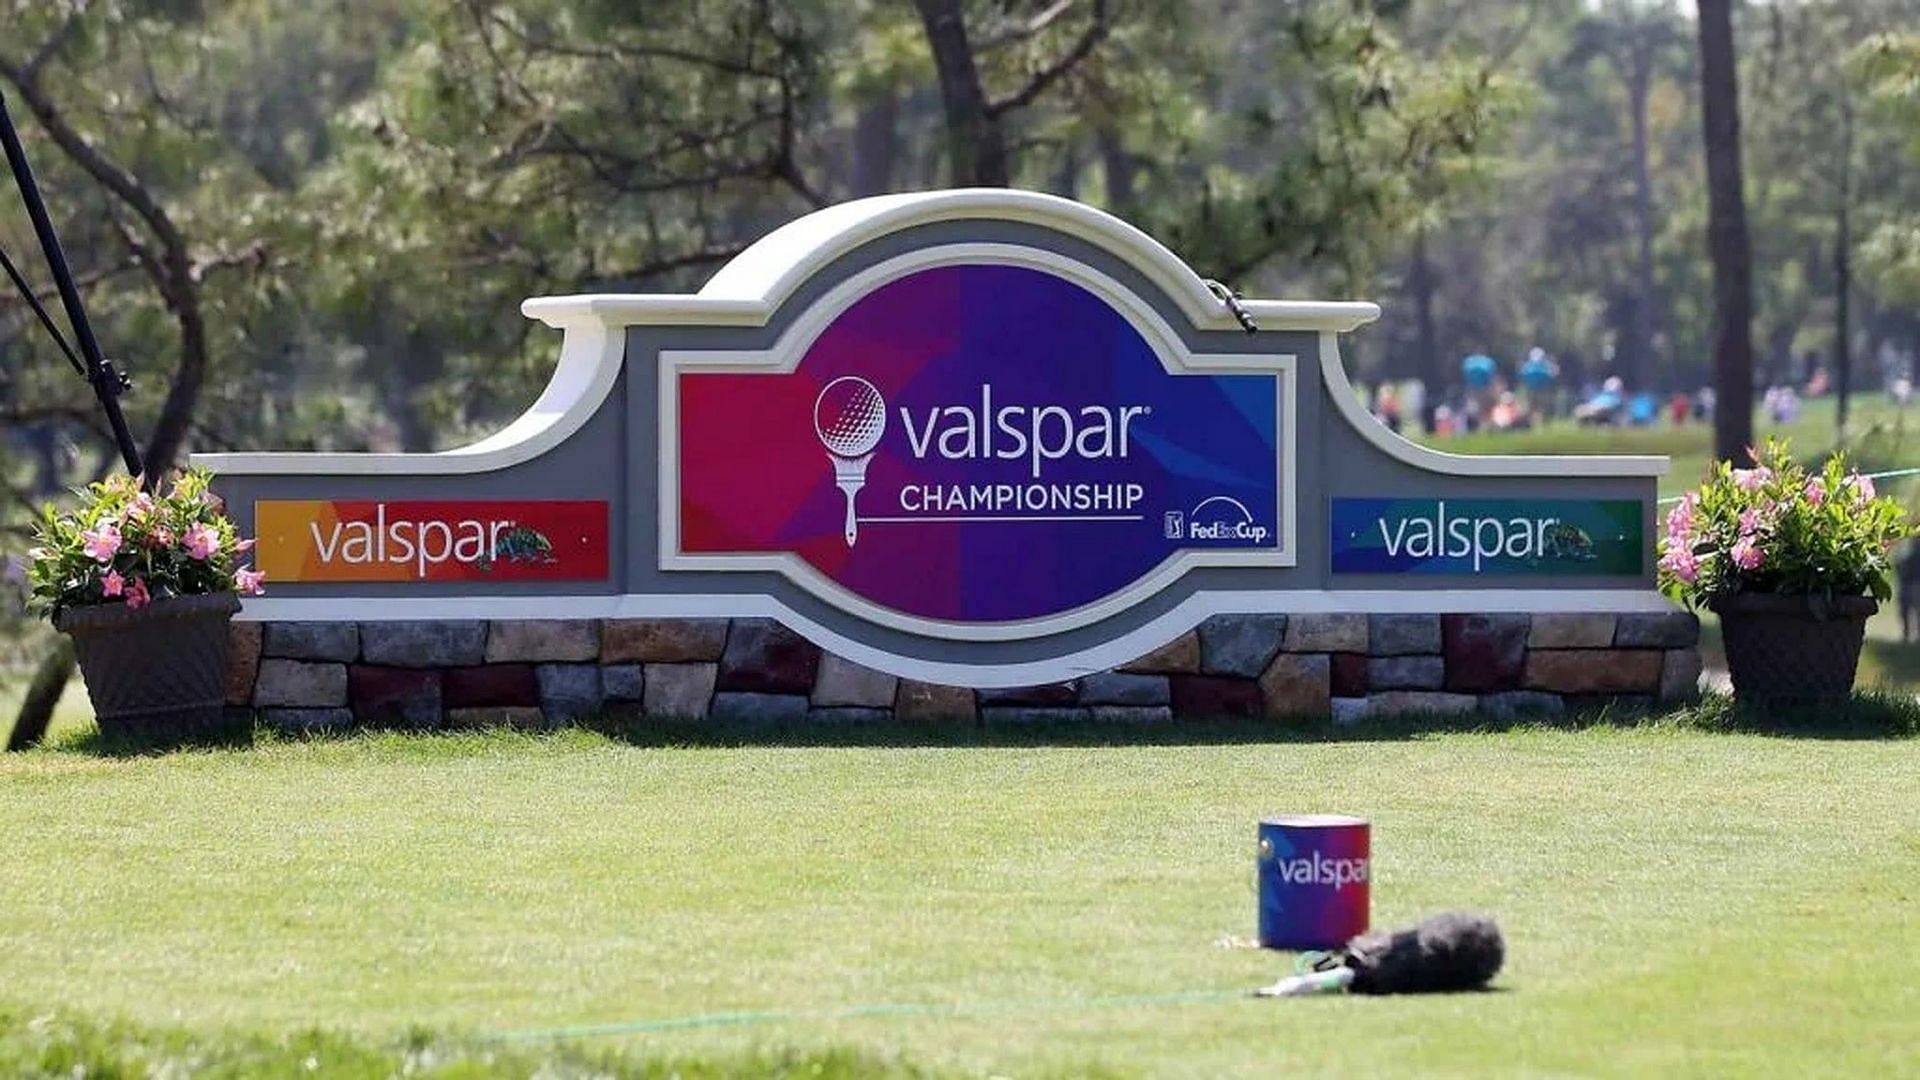 2023 Valspar Championship round 1 leaderboard explored